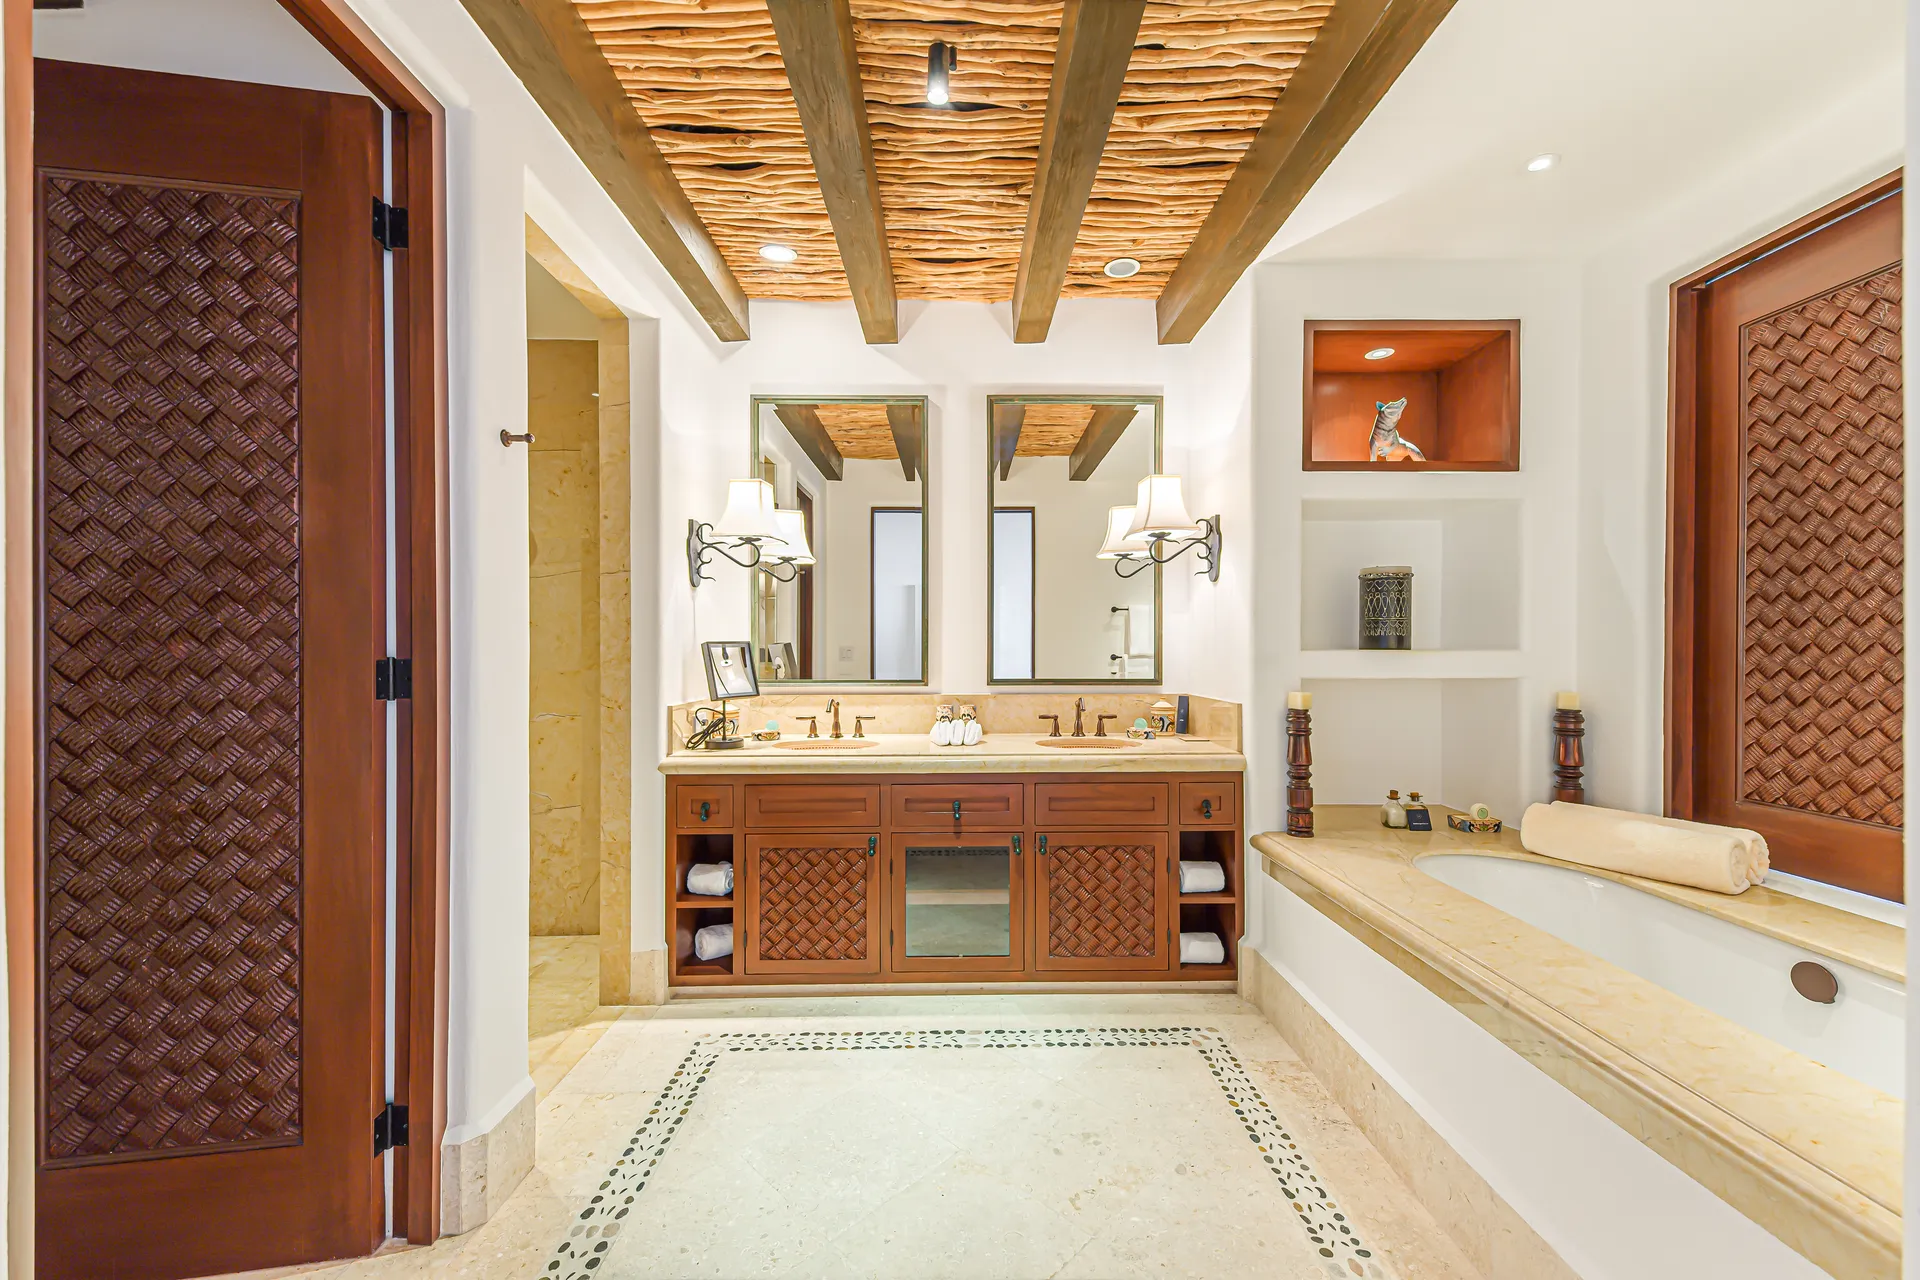 Las Ventanas 7201 is a luxury three-bedroom Rosewood branded residence in Los Cabos, Mexico.